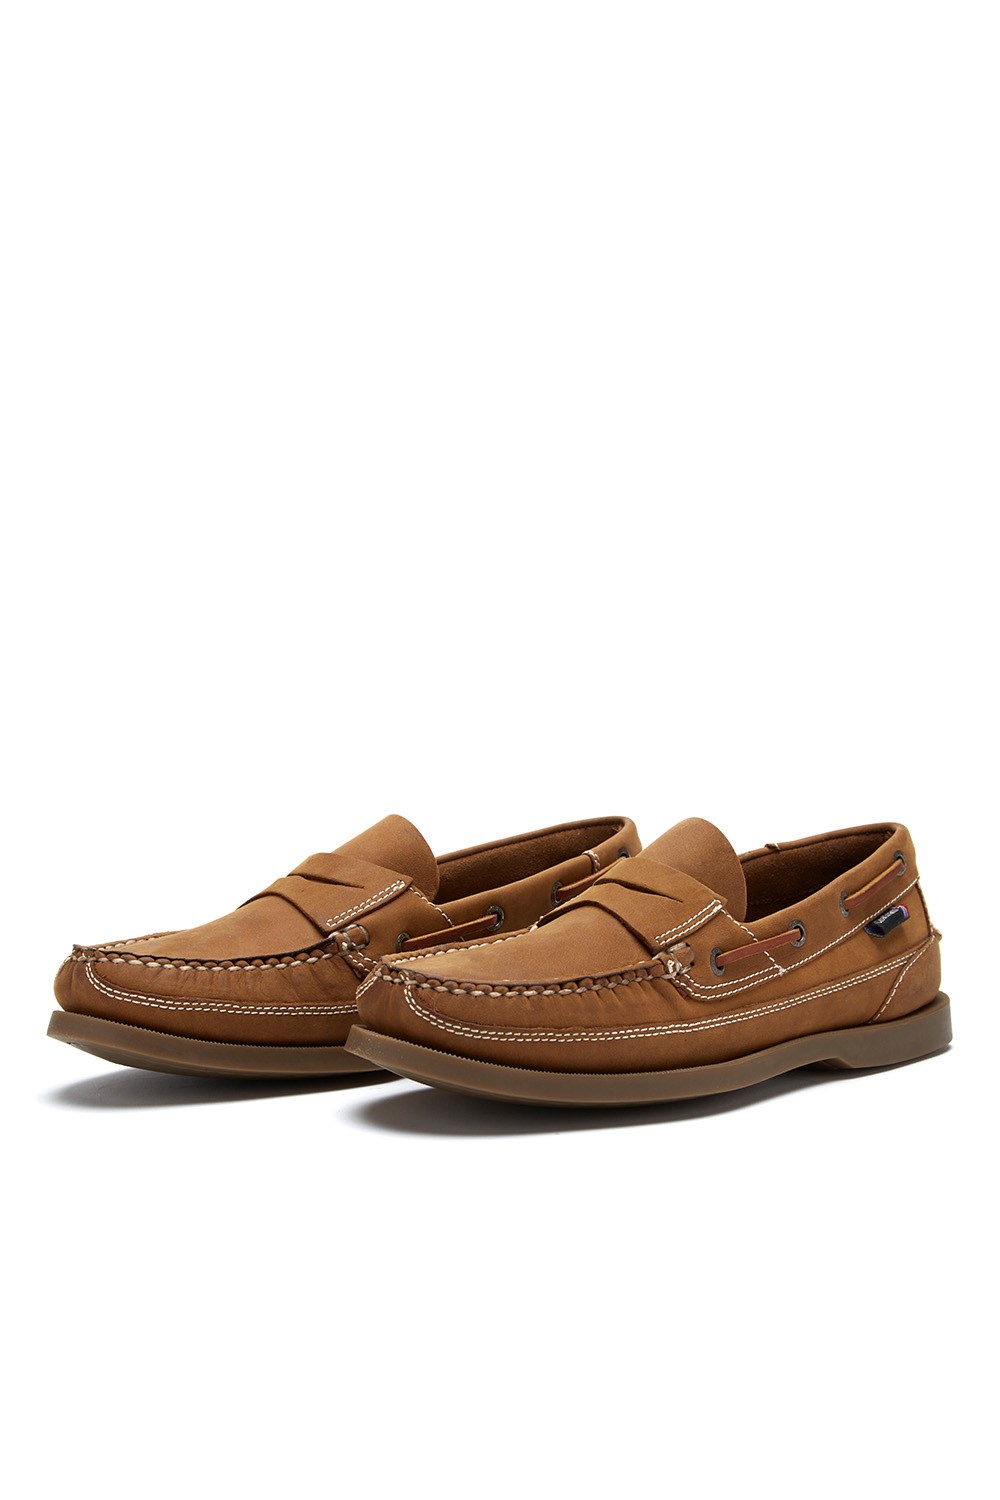 Gaff Ii G2 Slip-on Mens Leather Boat Shoes -